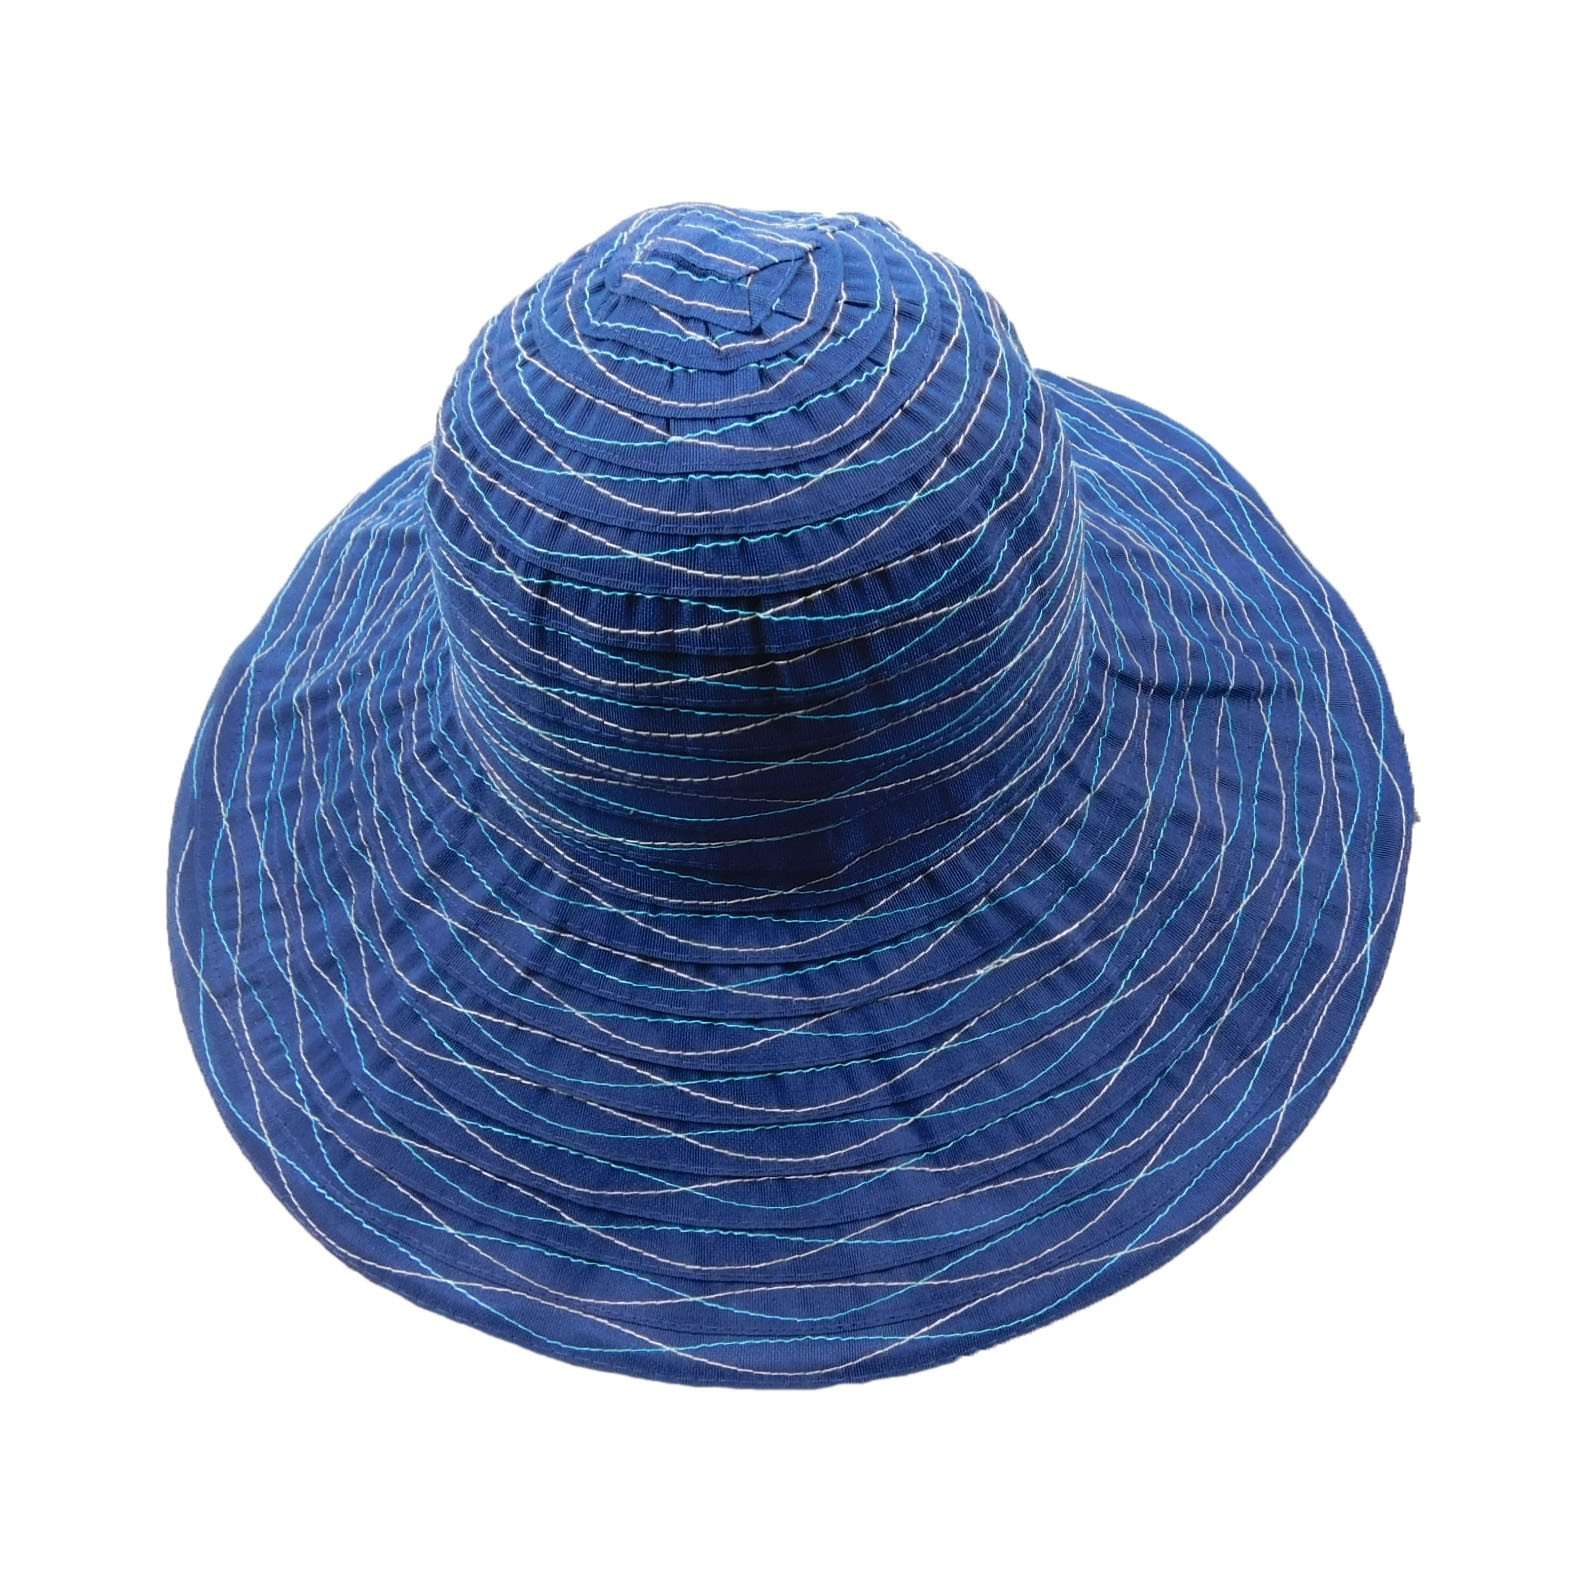 Shapeable Ribbon Floppy with Wavy Stitching, Floppy Hat - SetarTrading Hats 